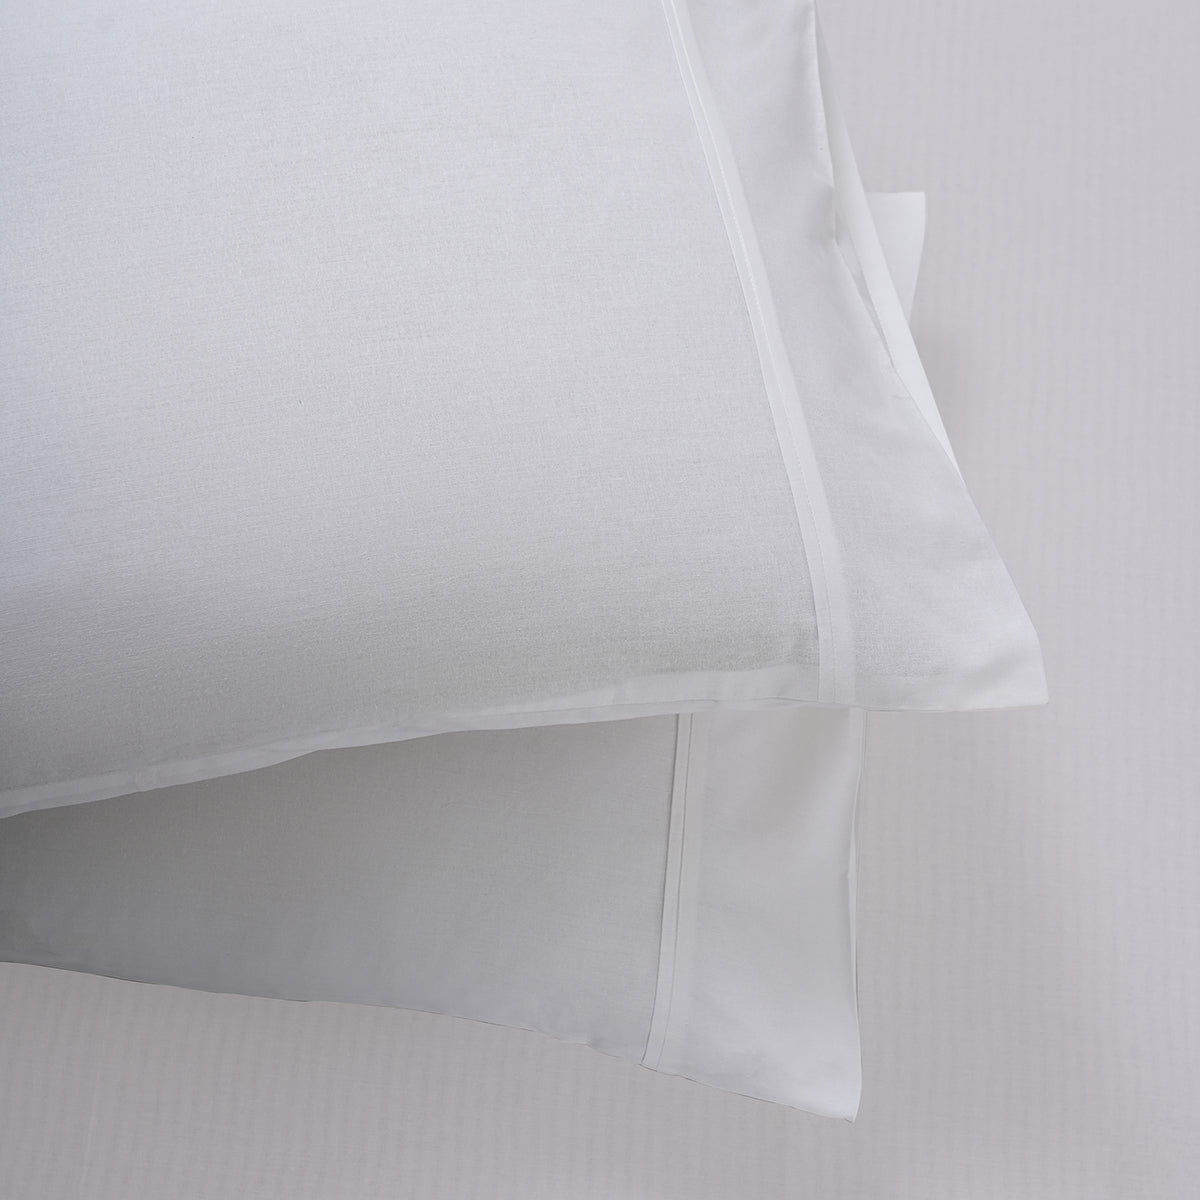 Eden Crisp & Light Weight 100% Cotton Solid White Fitted Sheet